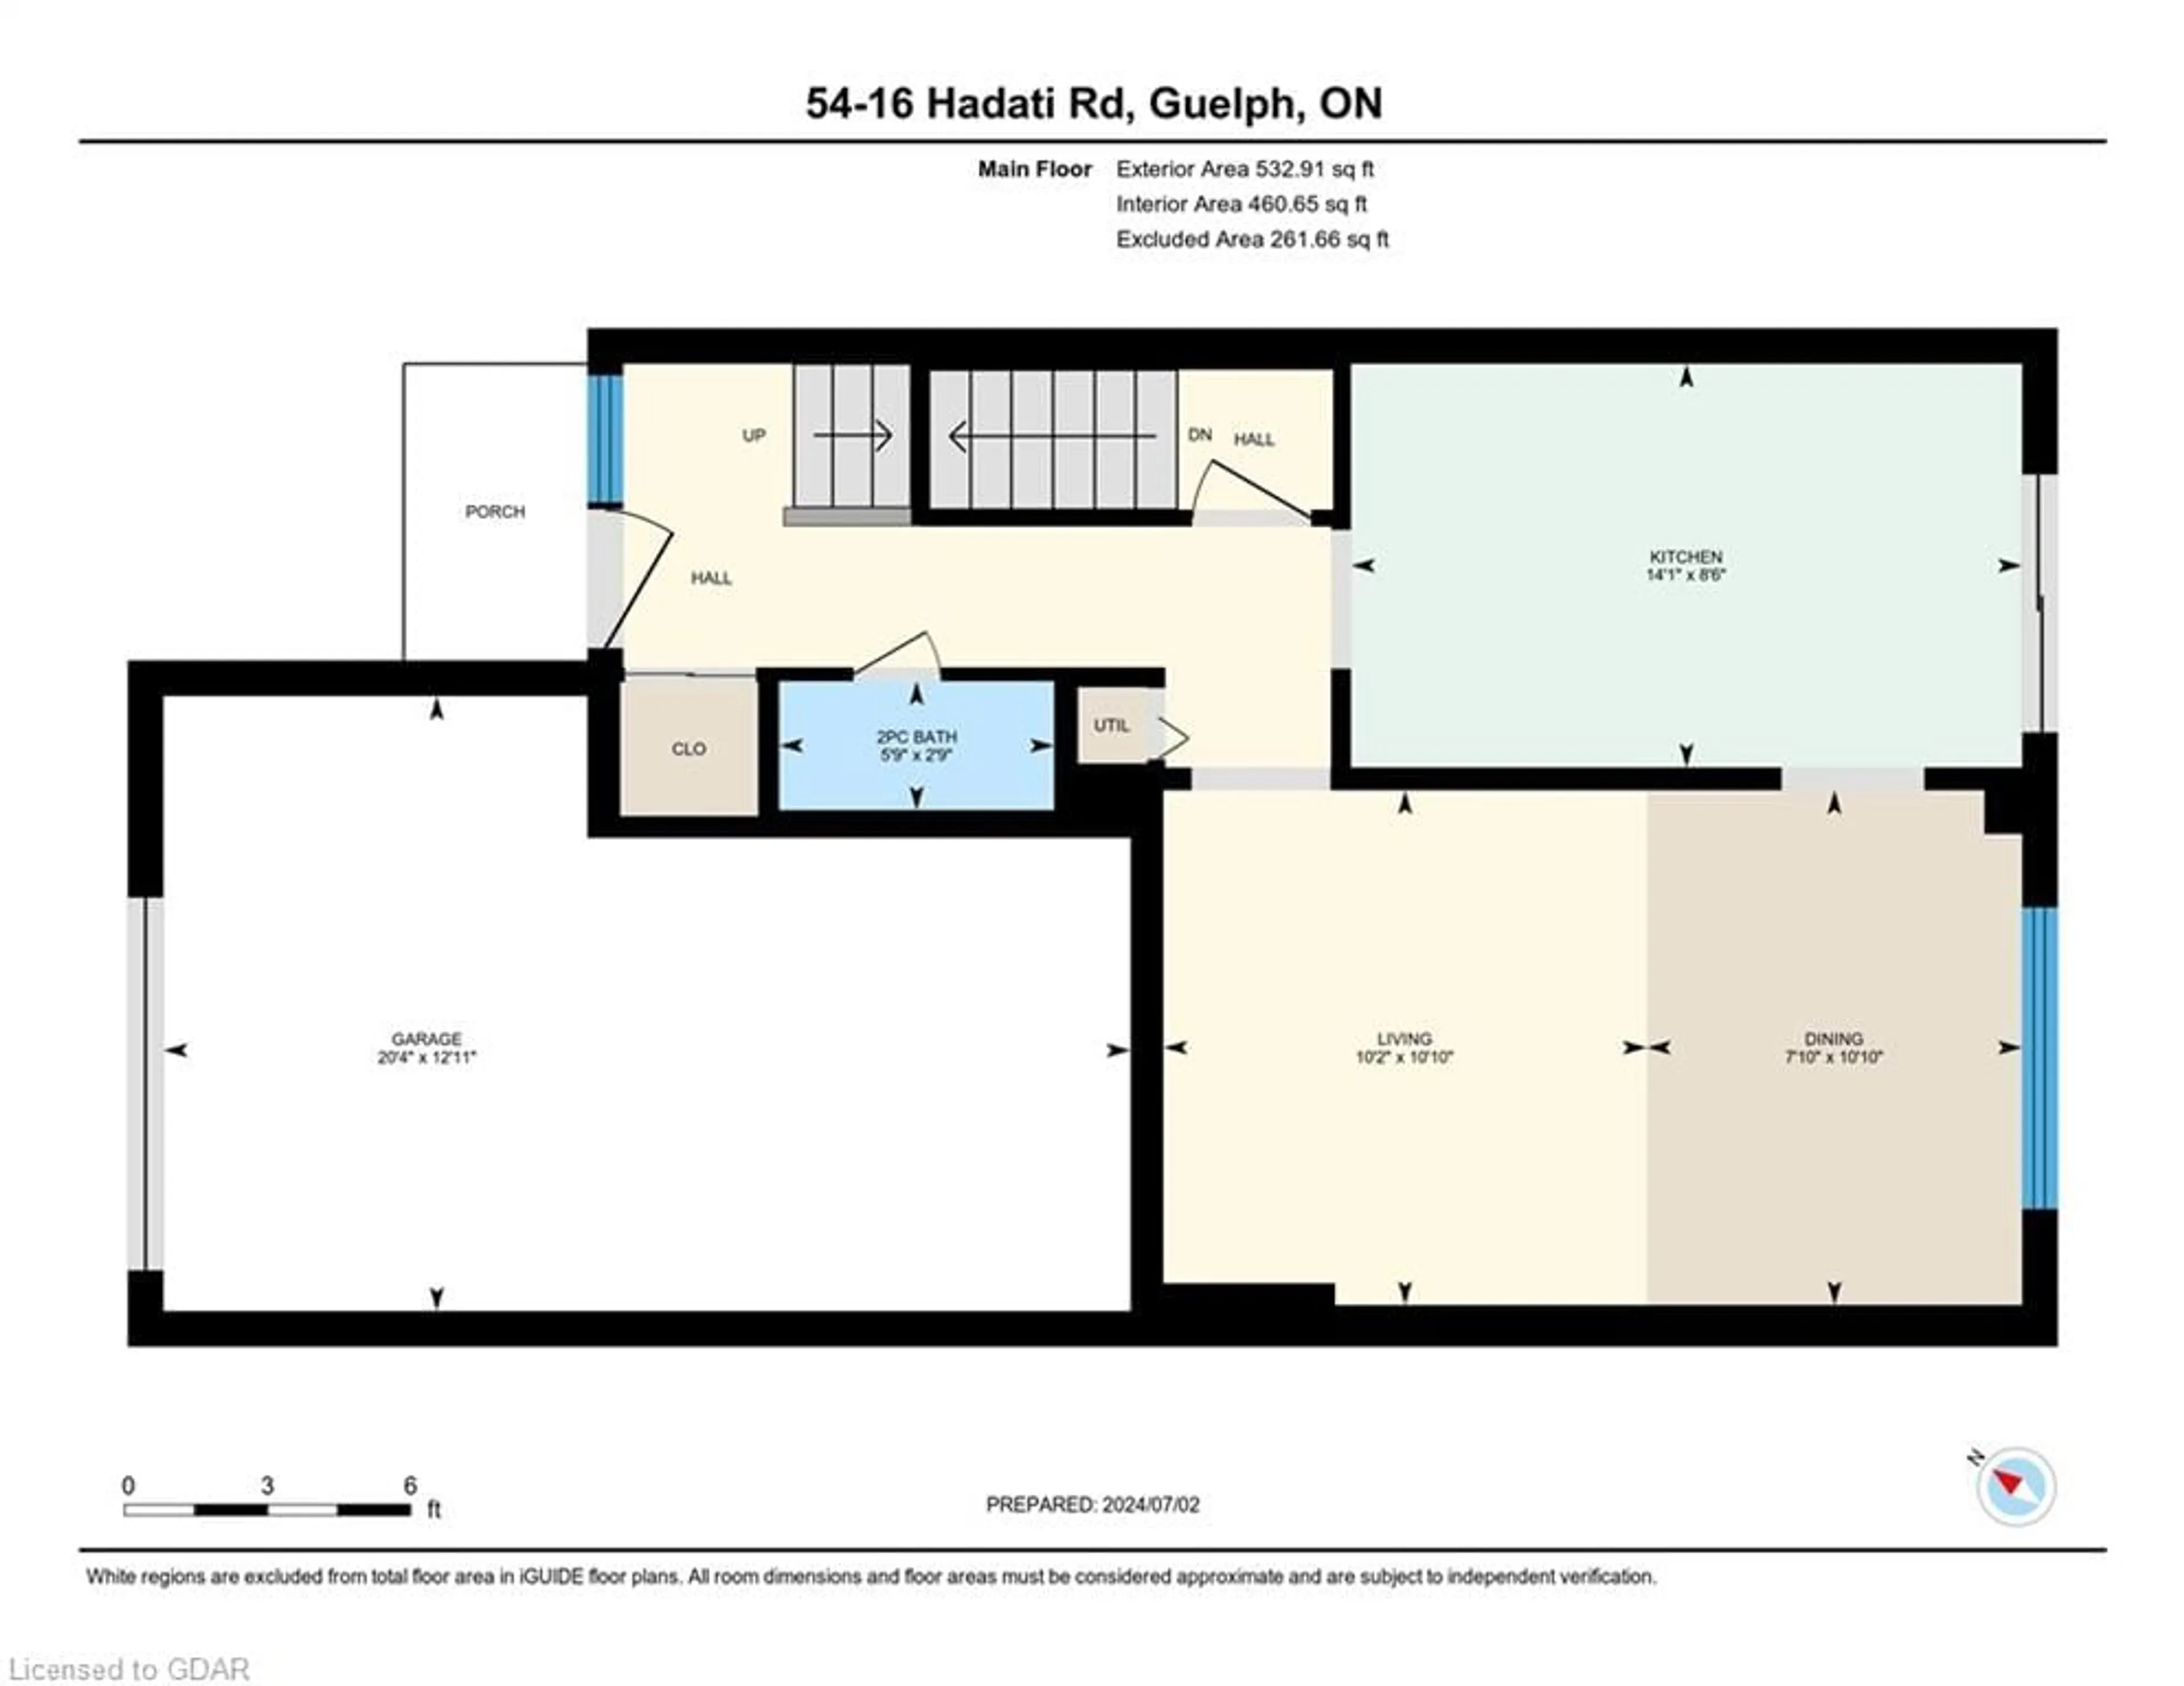 Floor plan for 16 Hadati Rd #54, Guelph Ontario N1E 6M2